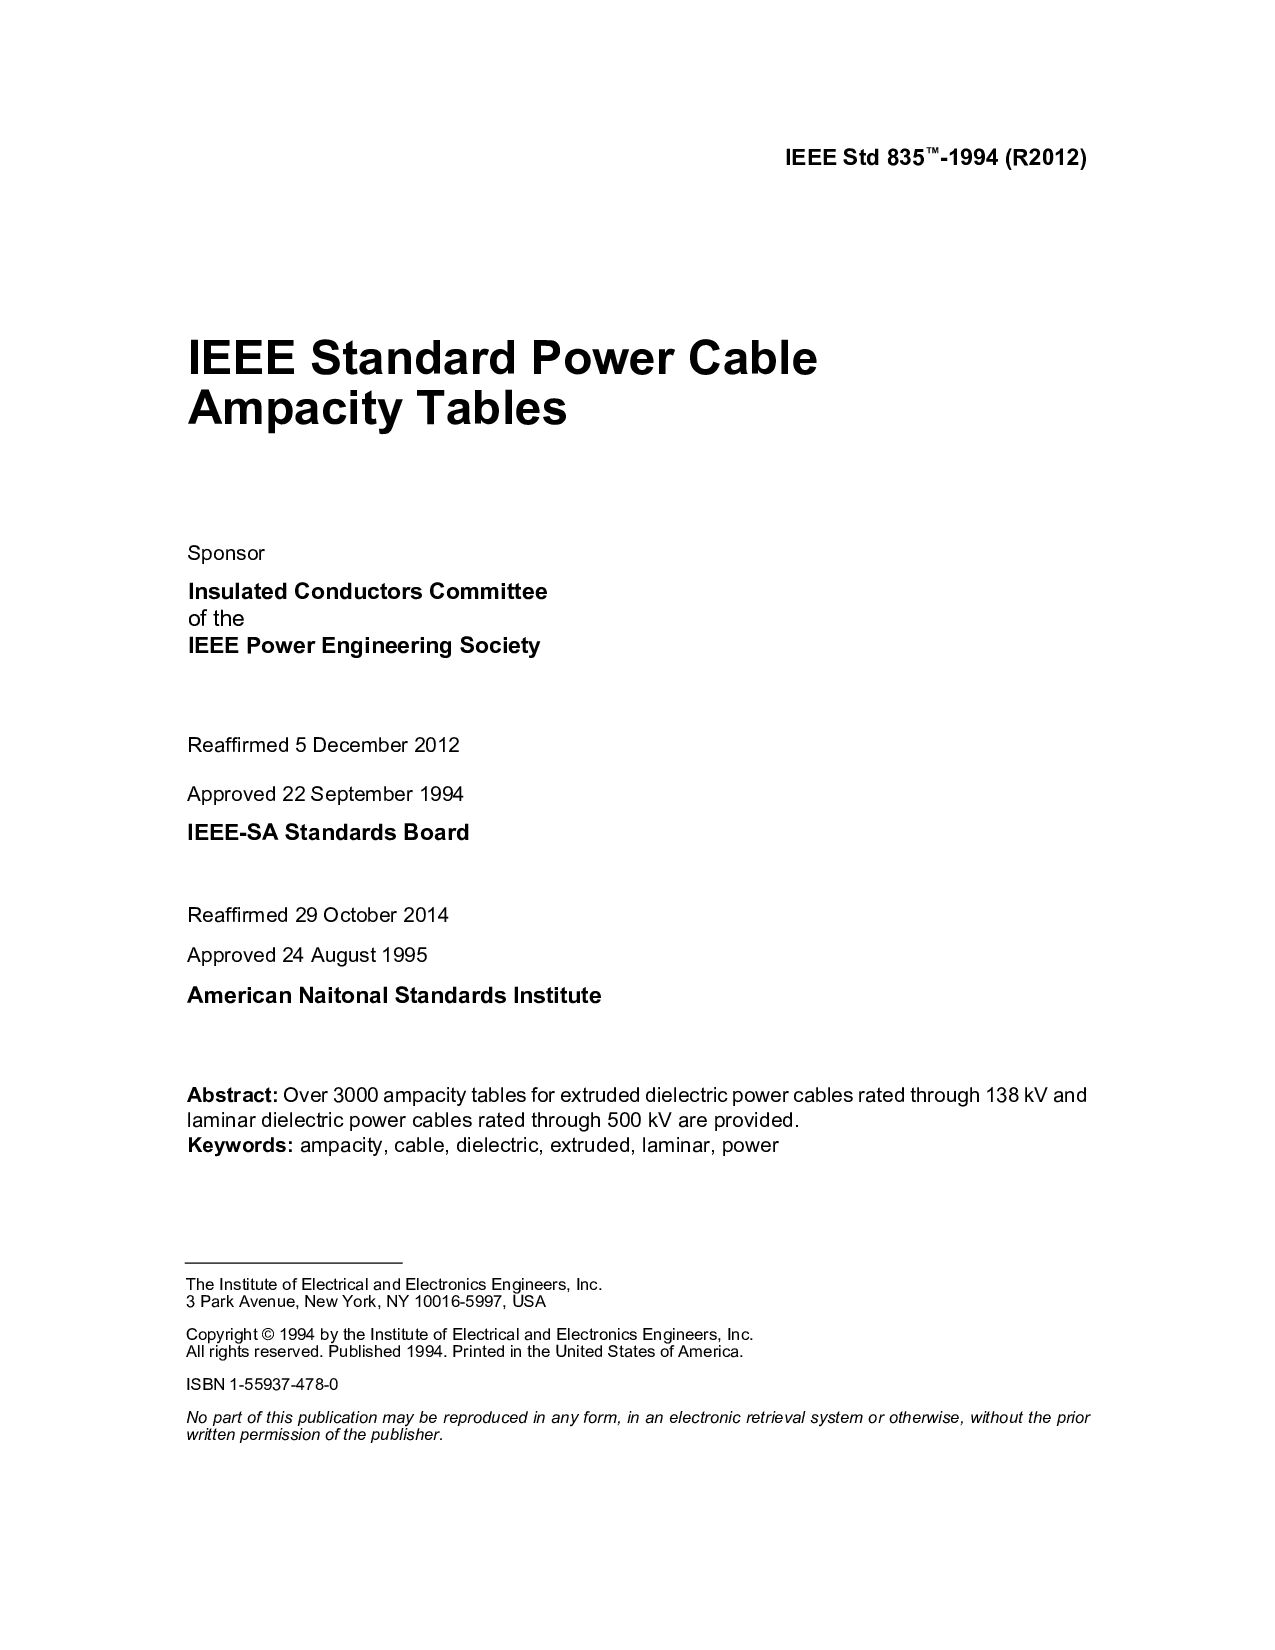 IEEE Std 835-1994(R2012)封面图